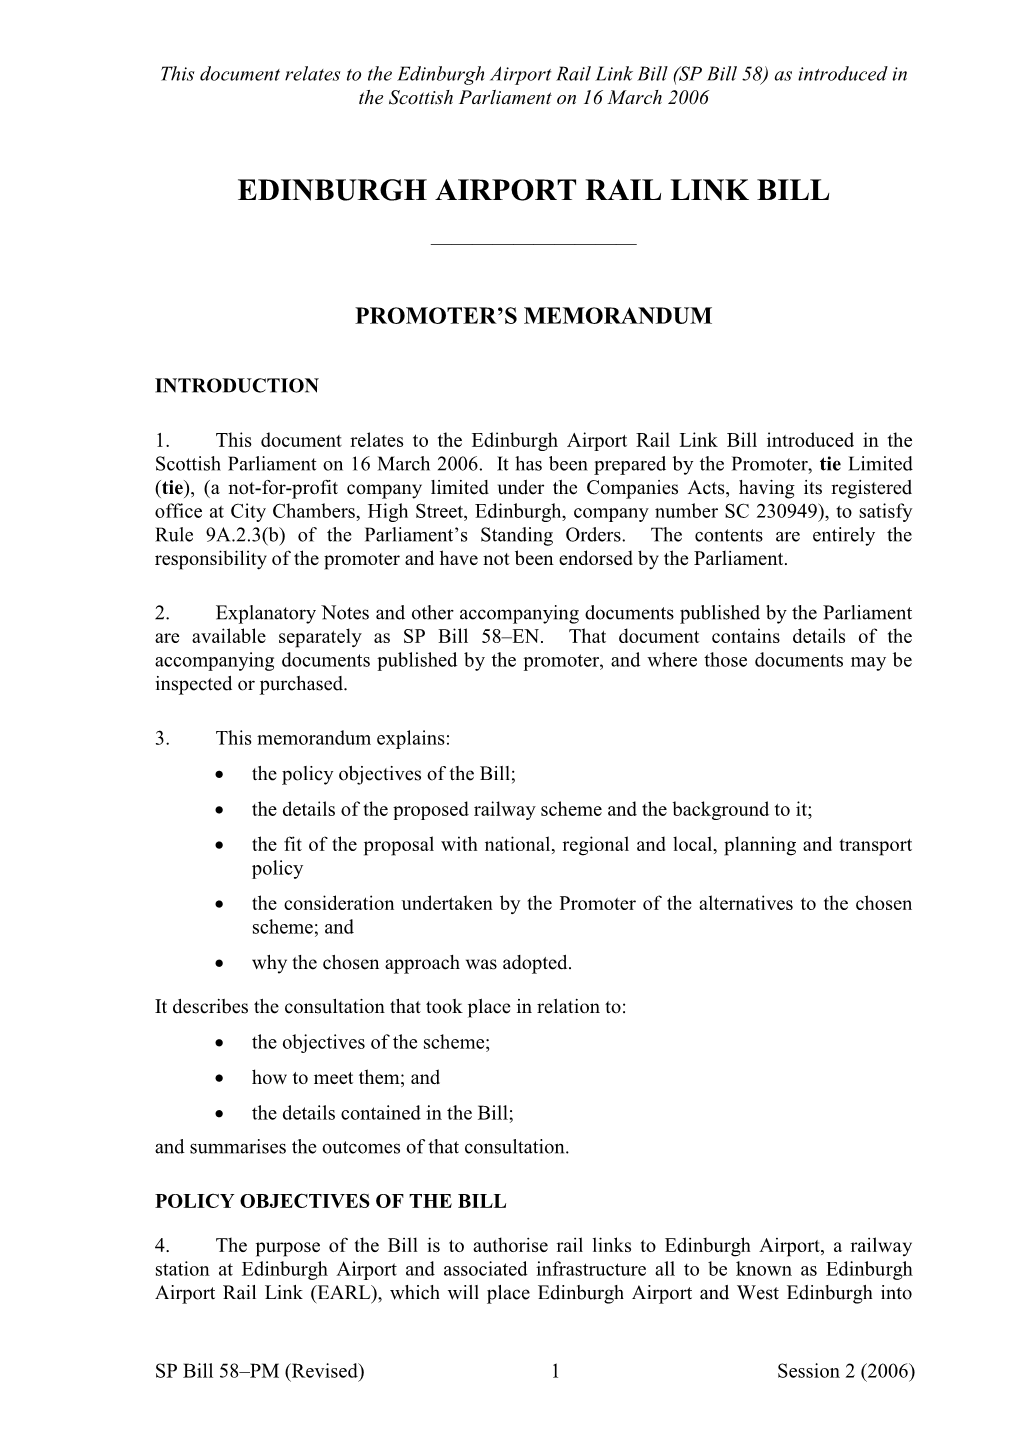 Promoter's Memorandum (1047KB Pdf)